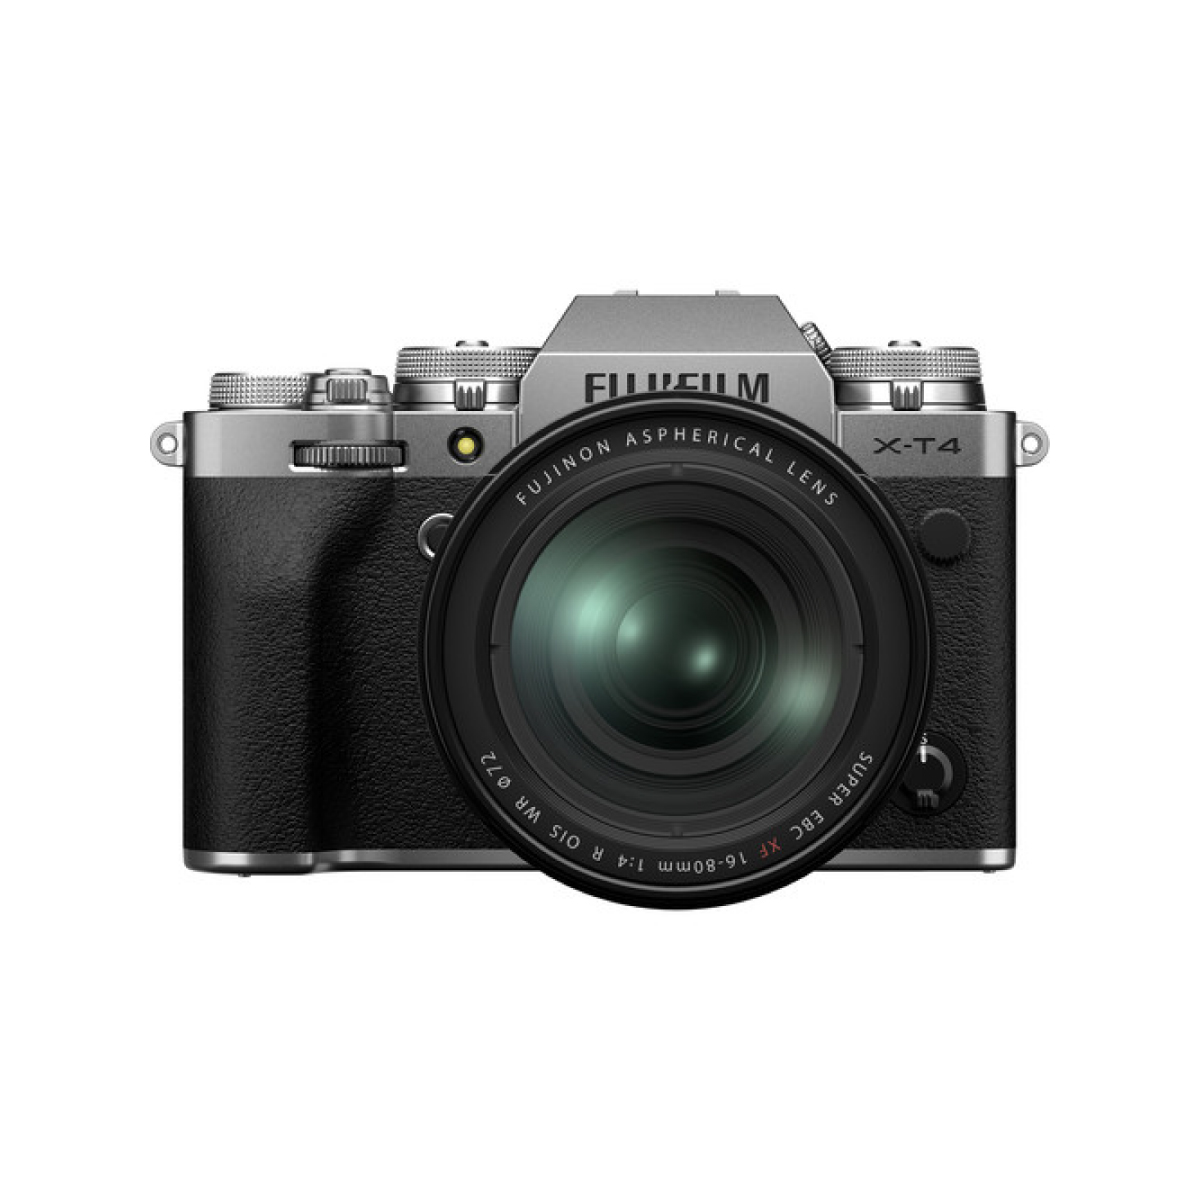 Fujifilm X-T4 26 MP Mirrorless Camera Body with XF16-80mm Lens – Silver (1)